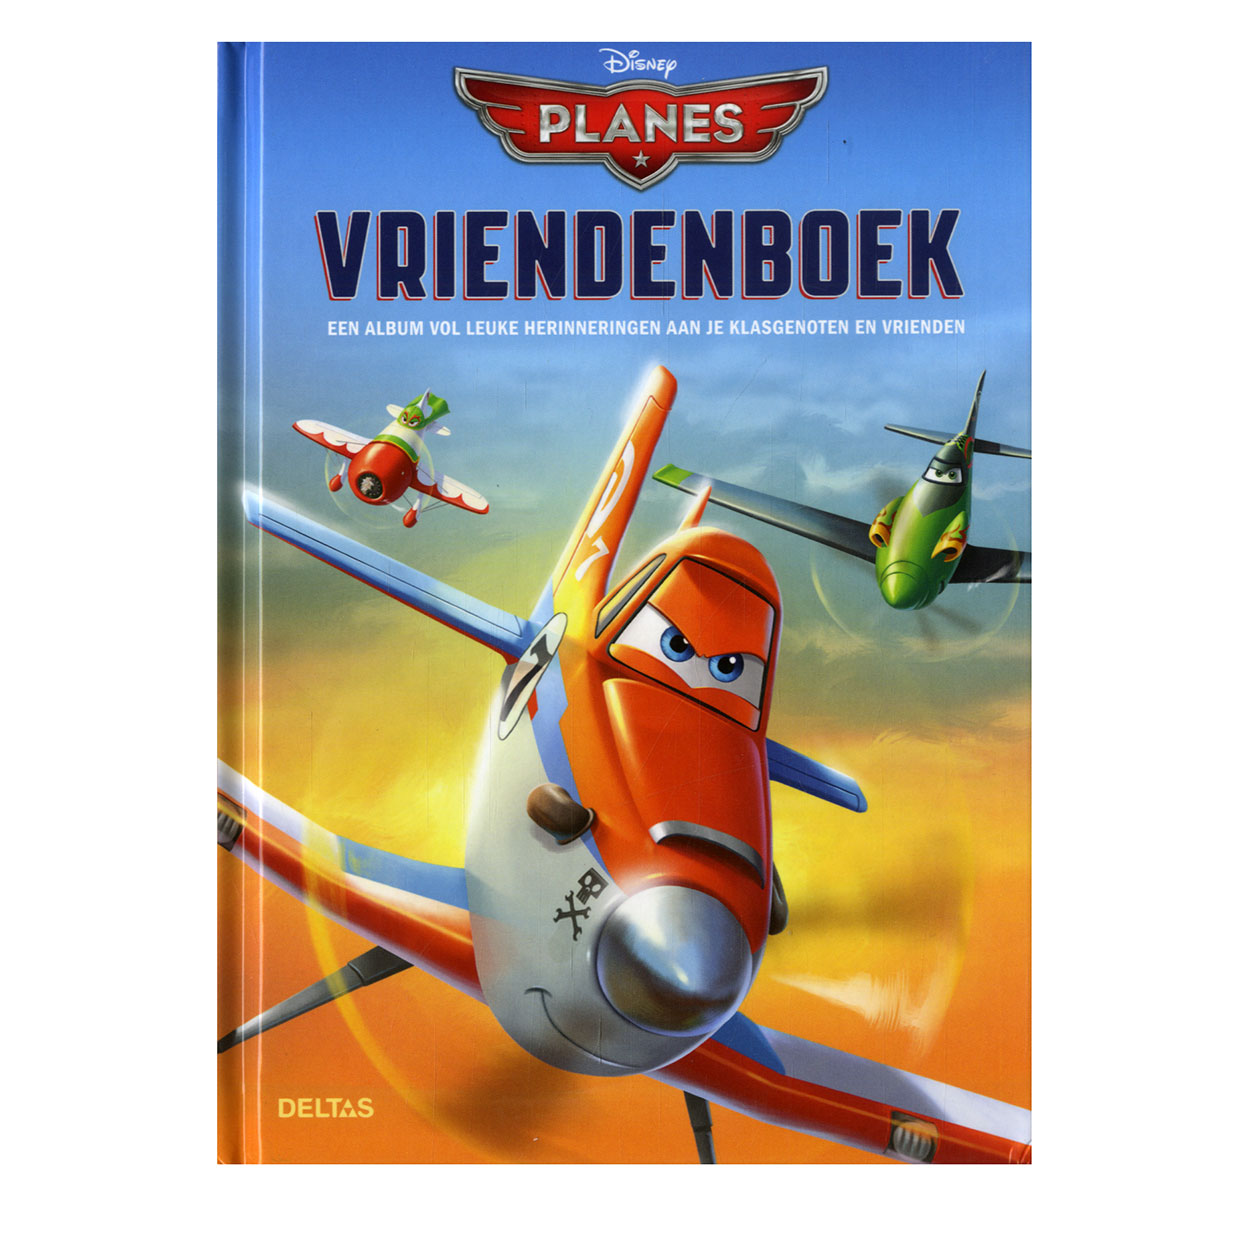 Kwestie Wonder ginder Disney Planes vriendenboek online kopen? | Lobbes Speelgoed